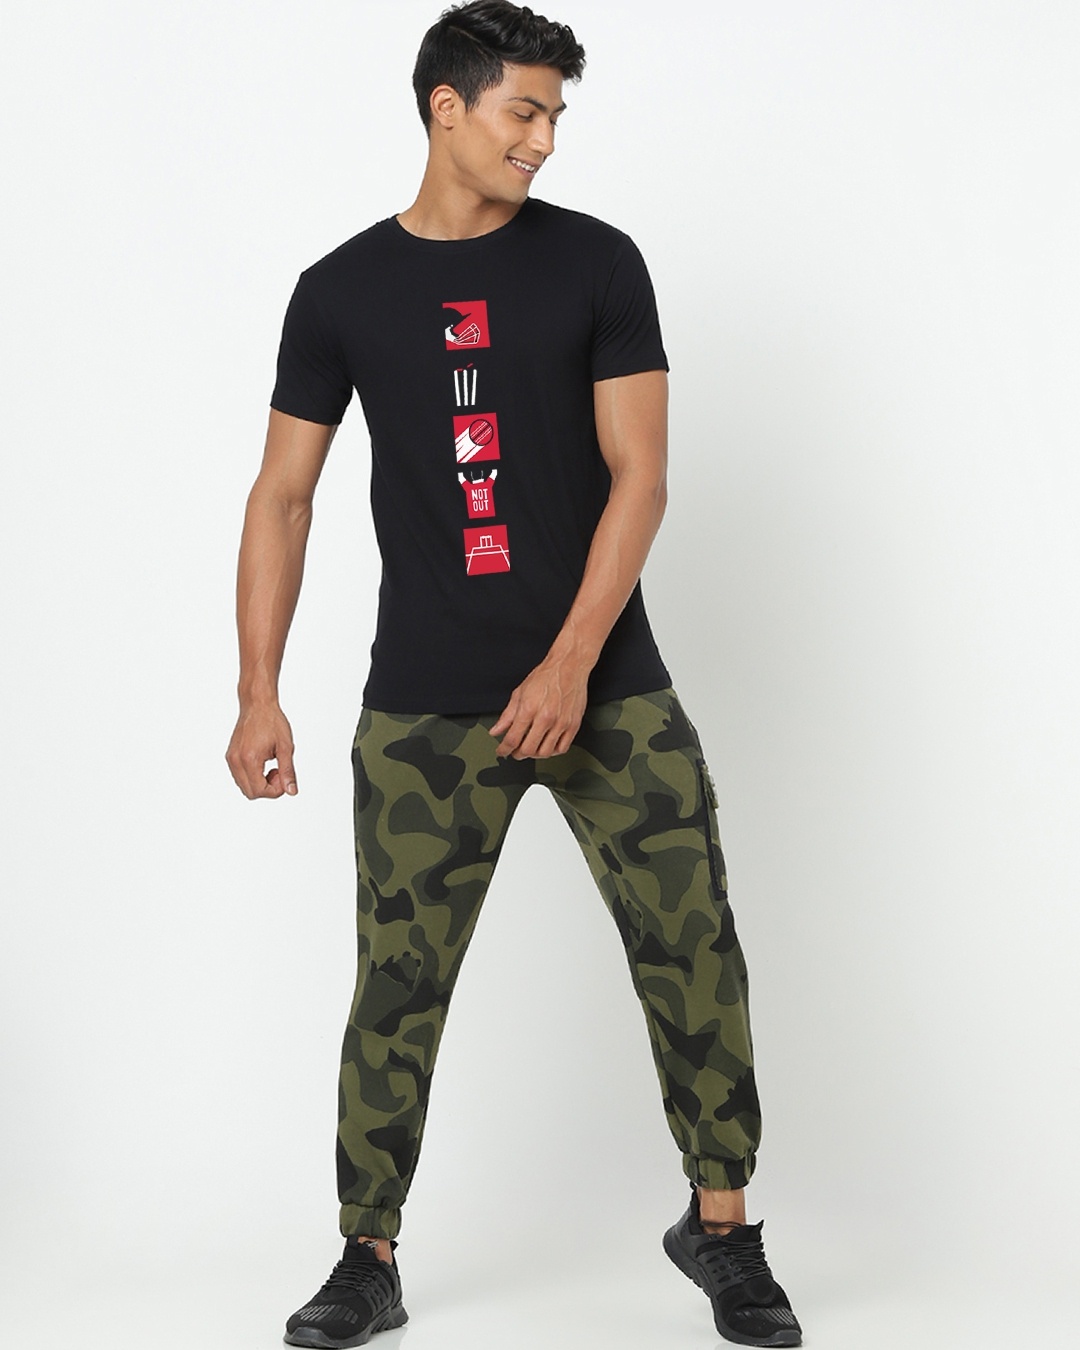 Shop Men's Black MSD 7 T- Shirt-Design